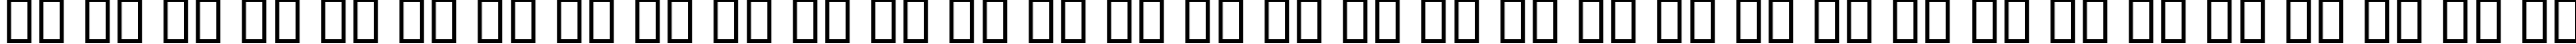 Пример написания русского алфавита шрифтом B Bardiya